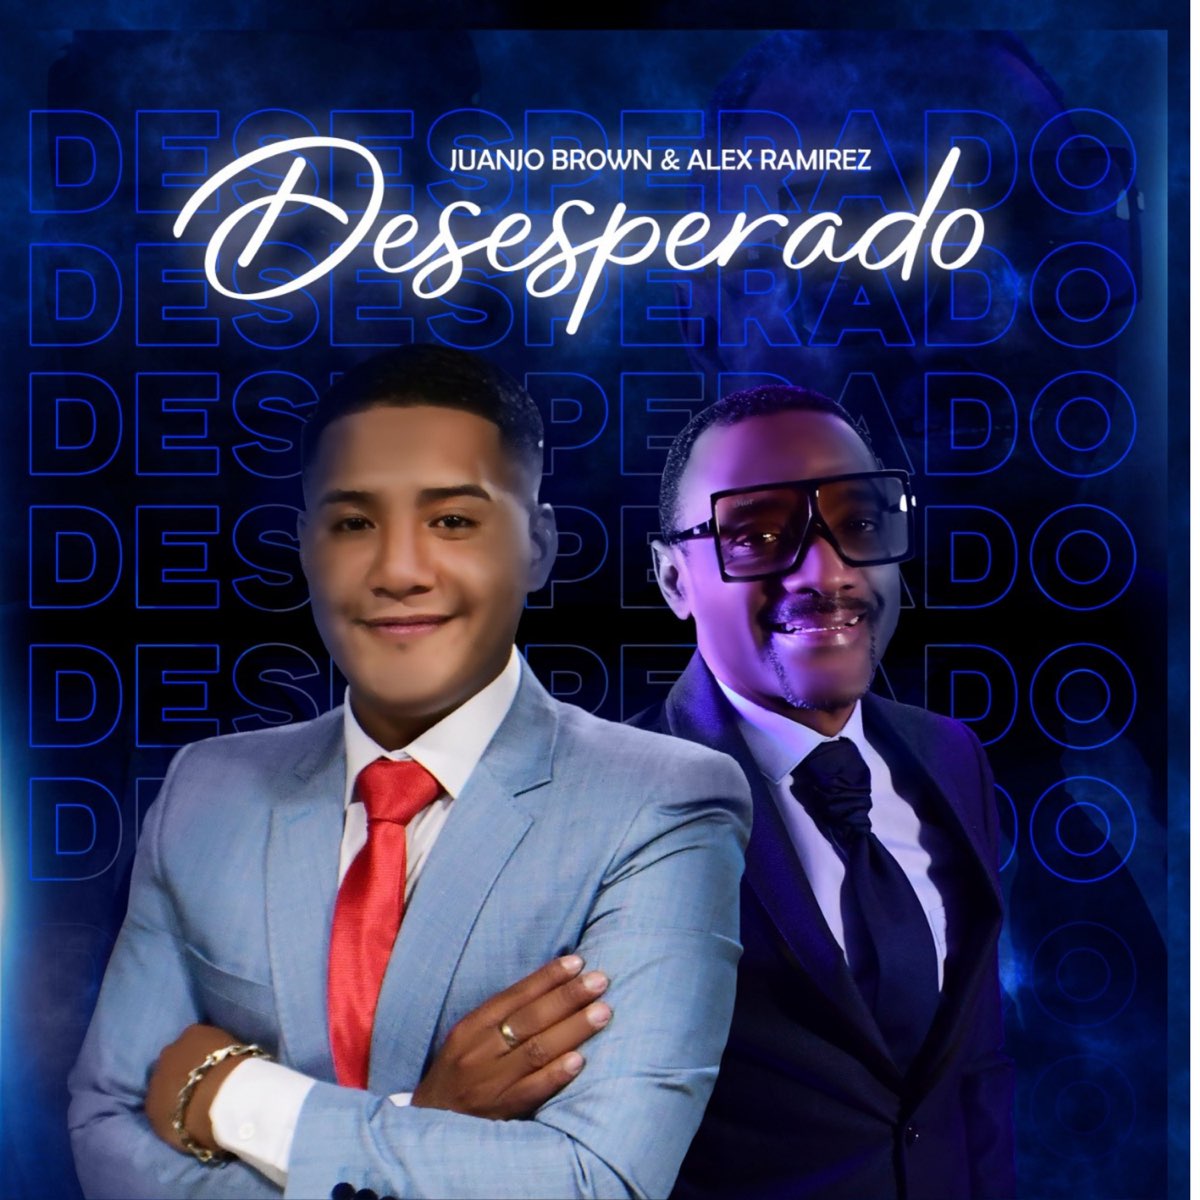 Desesperado - Single de Juanjo Brown & Alex Ramírez en Apple Music